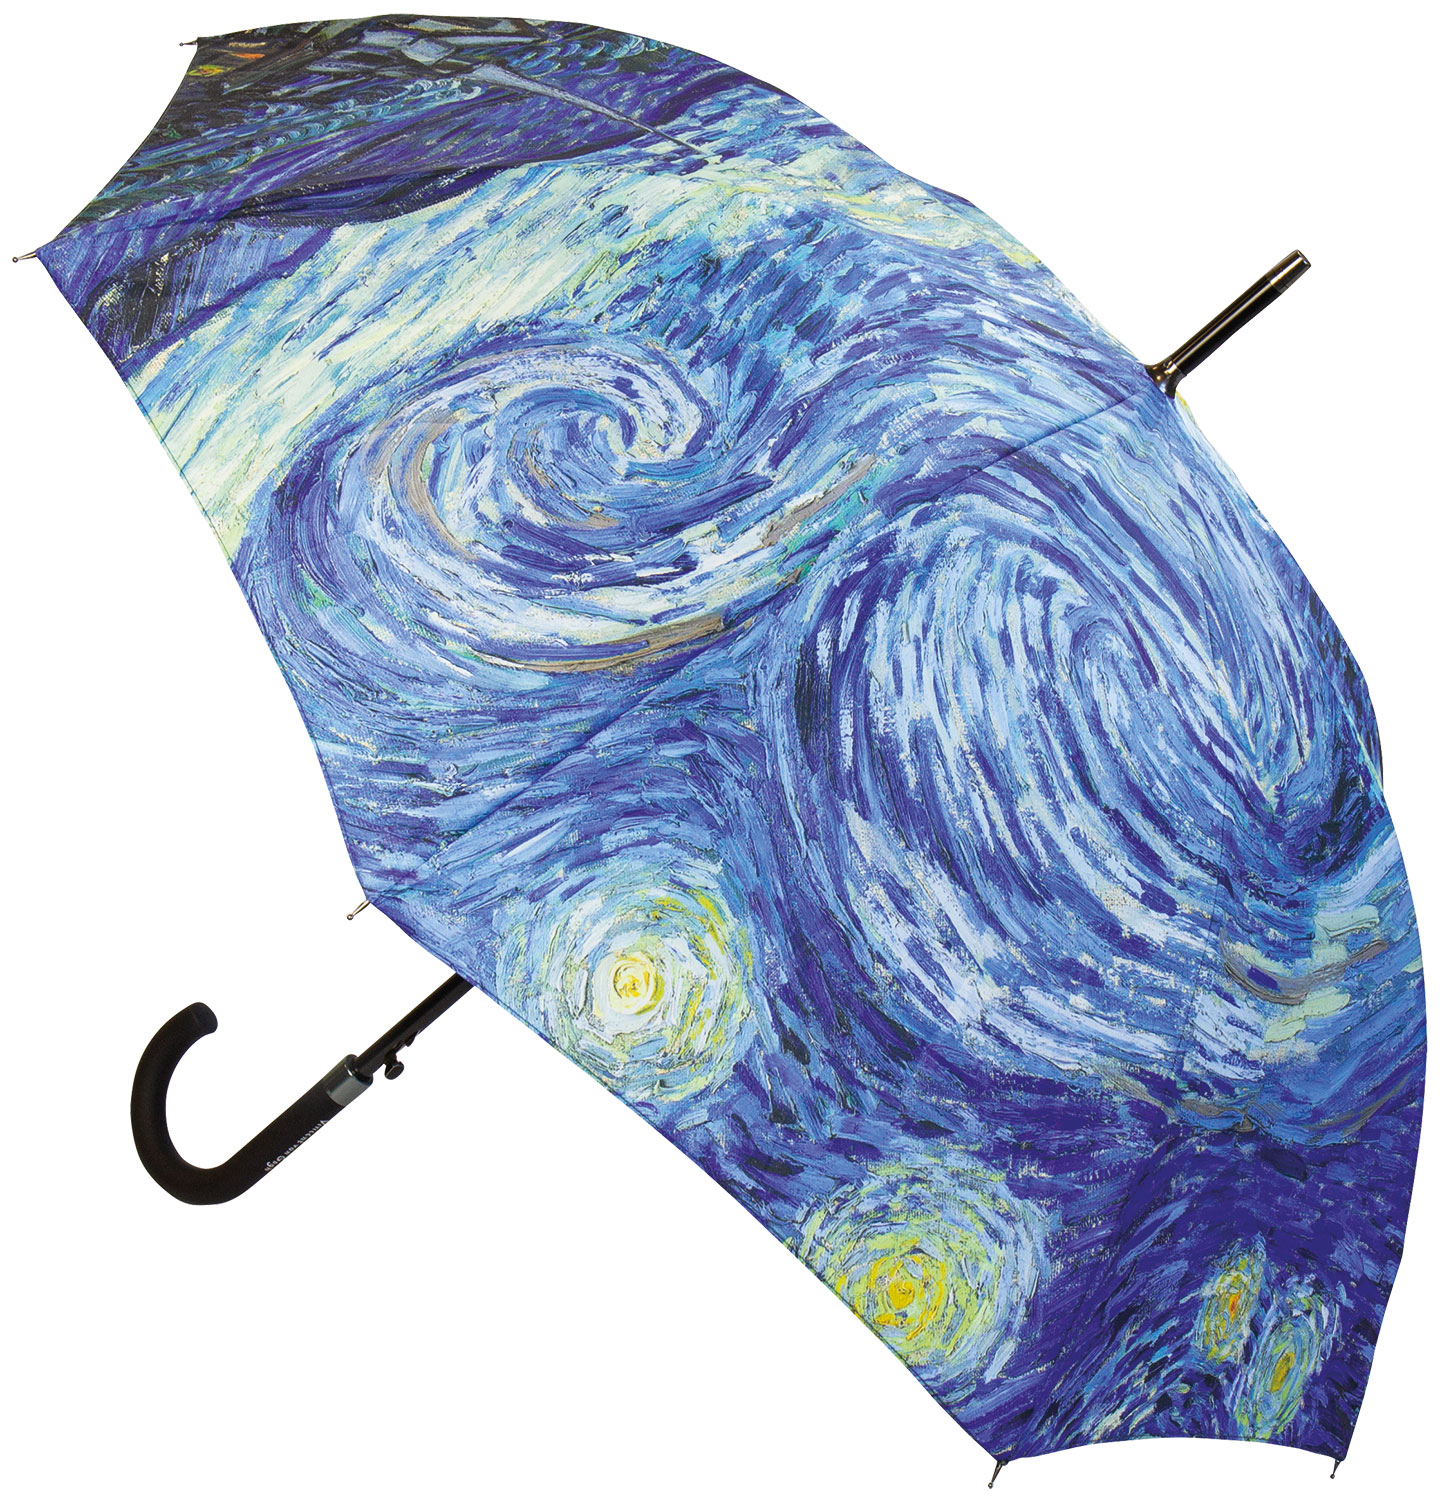 Stick umbrella "Starry Night" by Vincent van Gogh